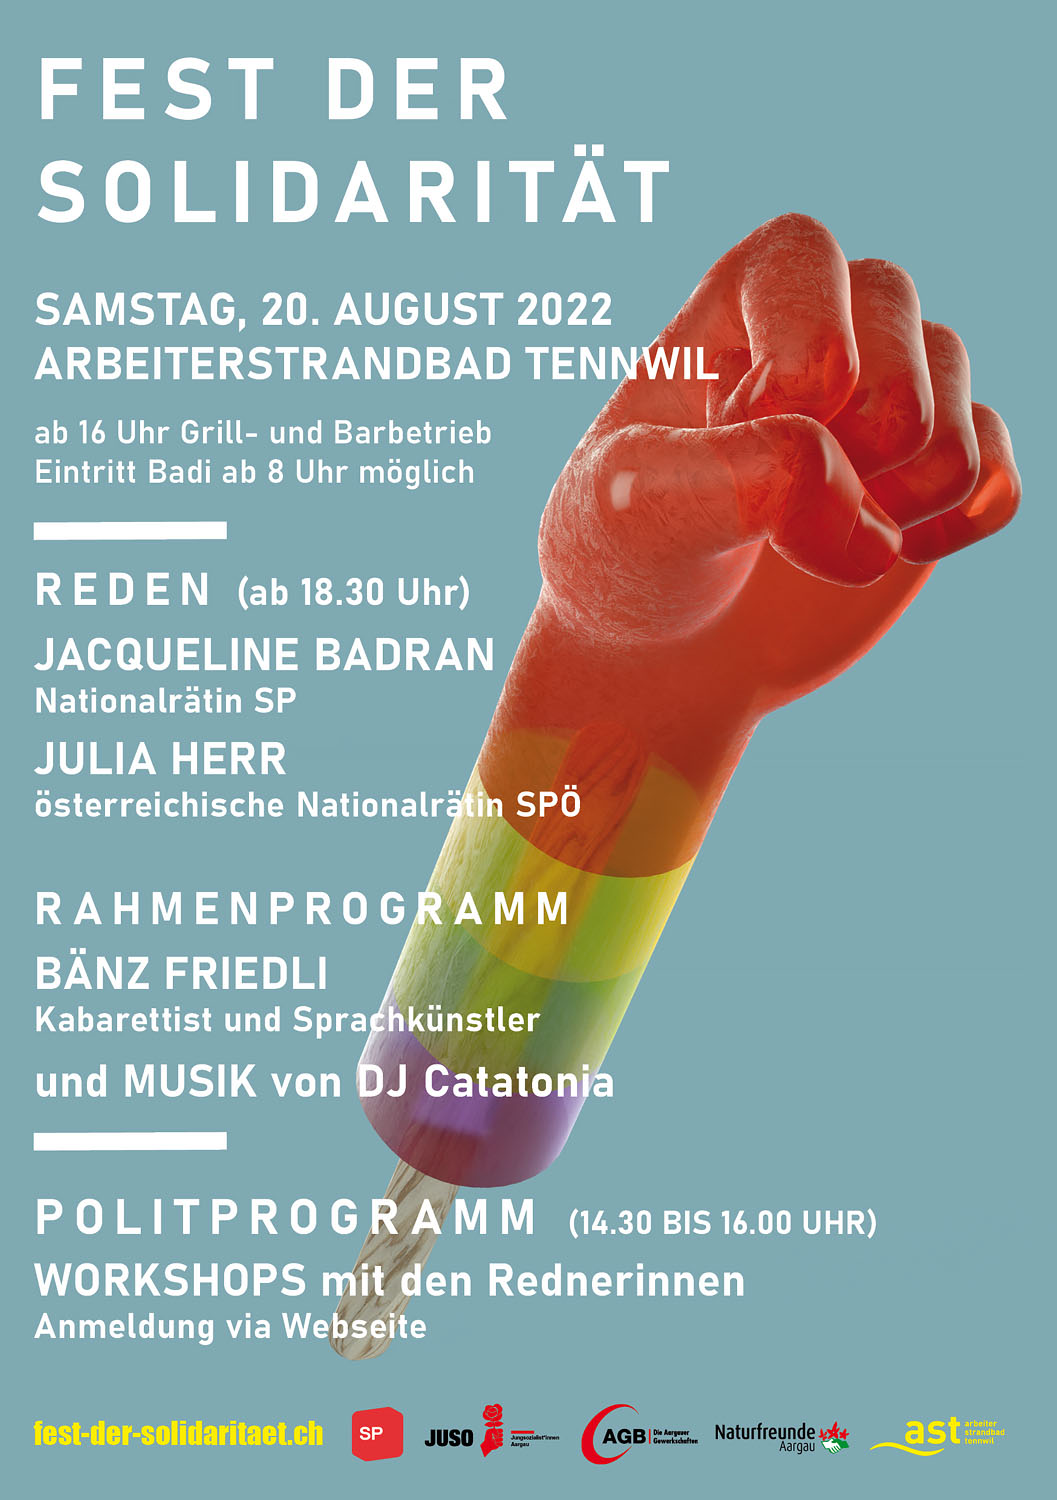 Fest der Solidarität: Samstag, 20. August, Arbeiterstrandbad Tennwil, ab 16 Uhr, Jacqueline Badran, Julia Herr, Bänz Friedli, DJ Catatonia